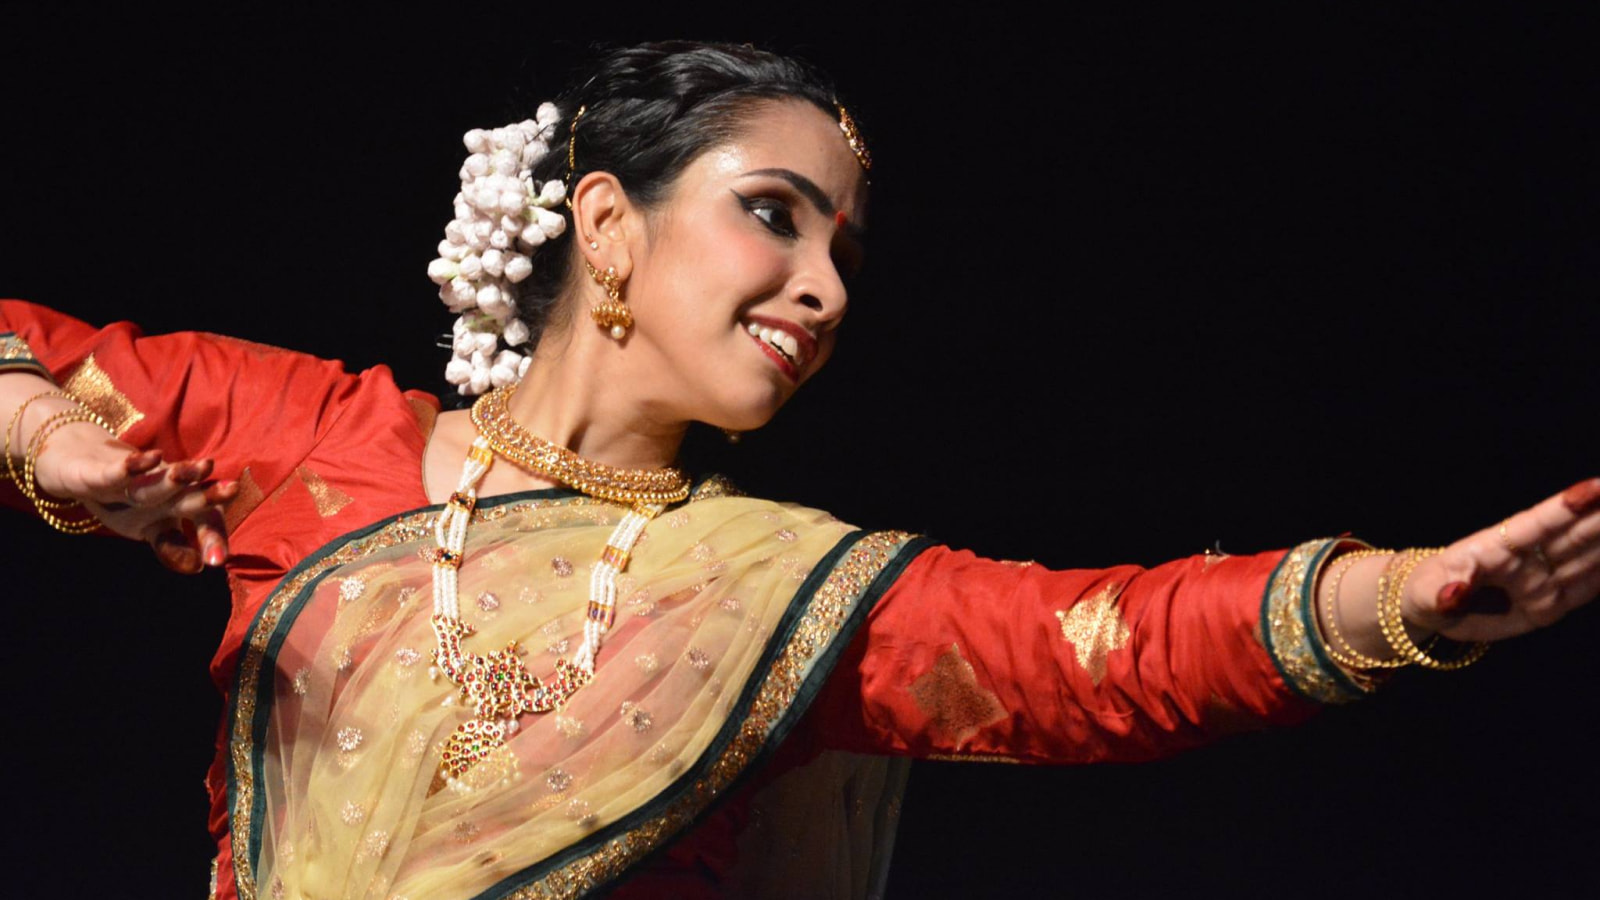 Anuradha Sethuraman Natawari Dancer of Jankiprasad Kathak Gharana of Banaras